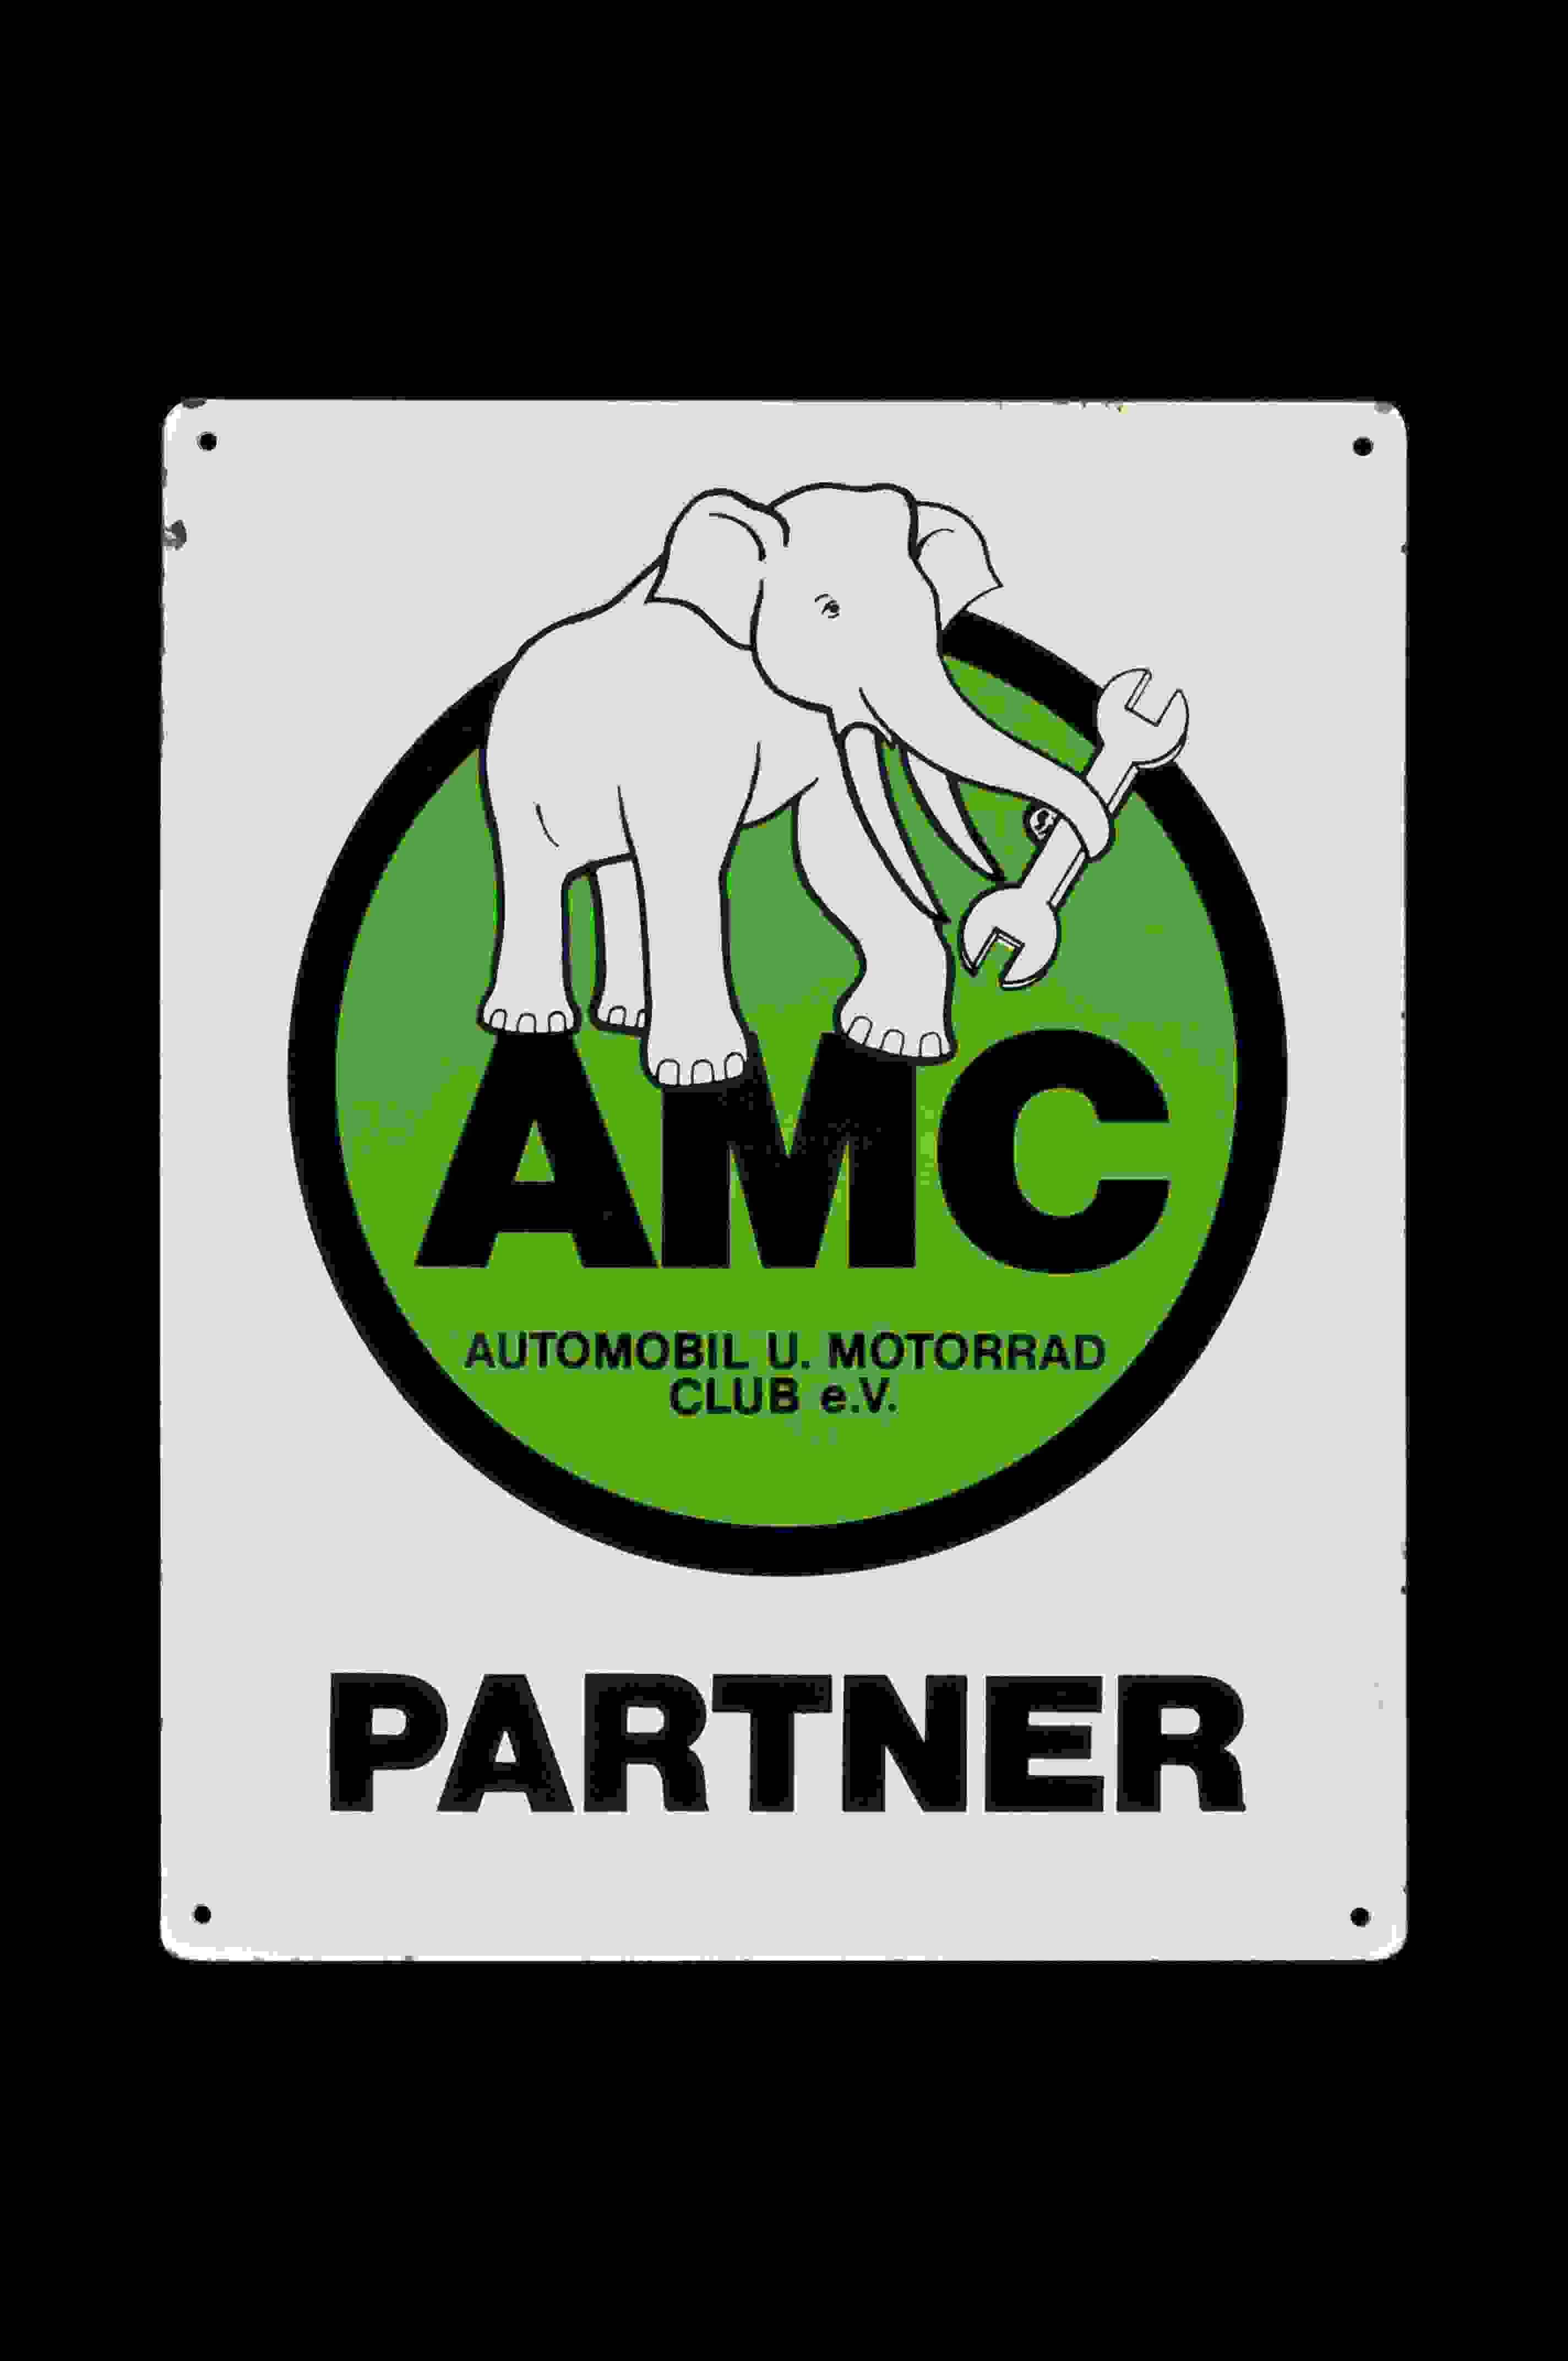 AMC Automobil u. Motorrad Club e.V. 